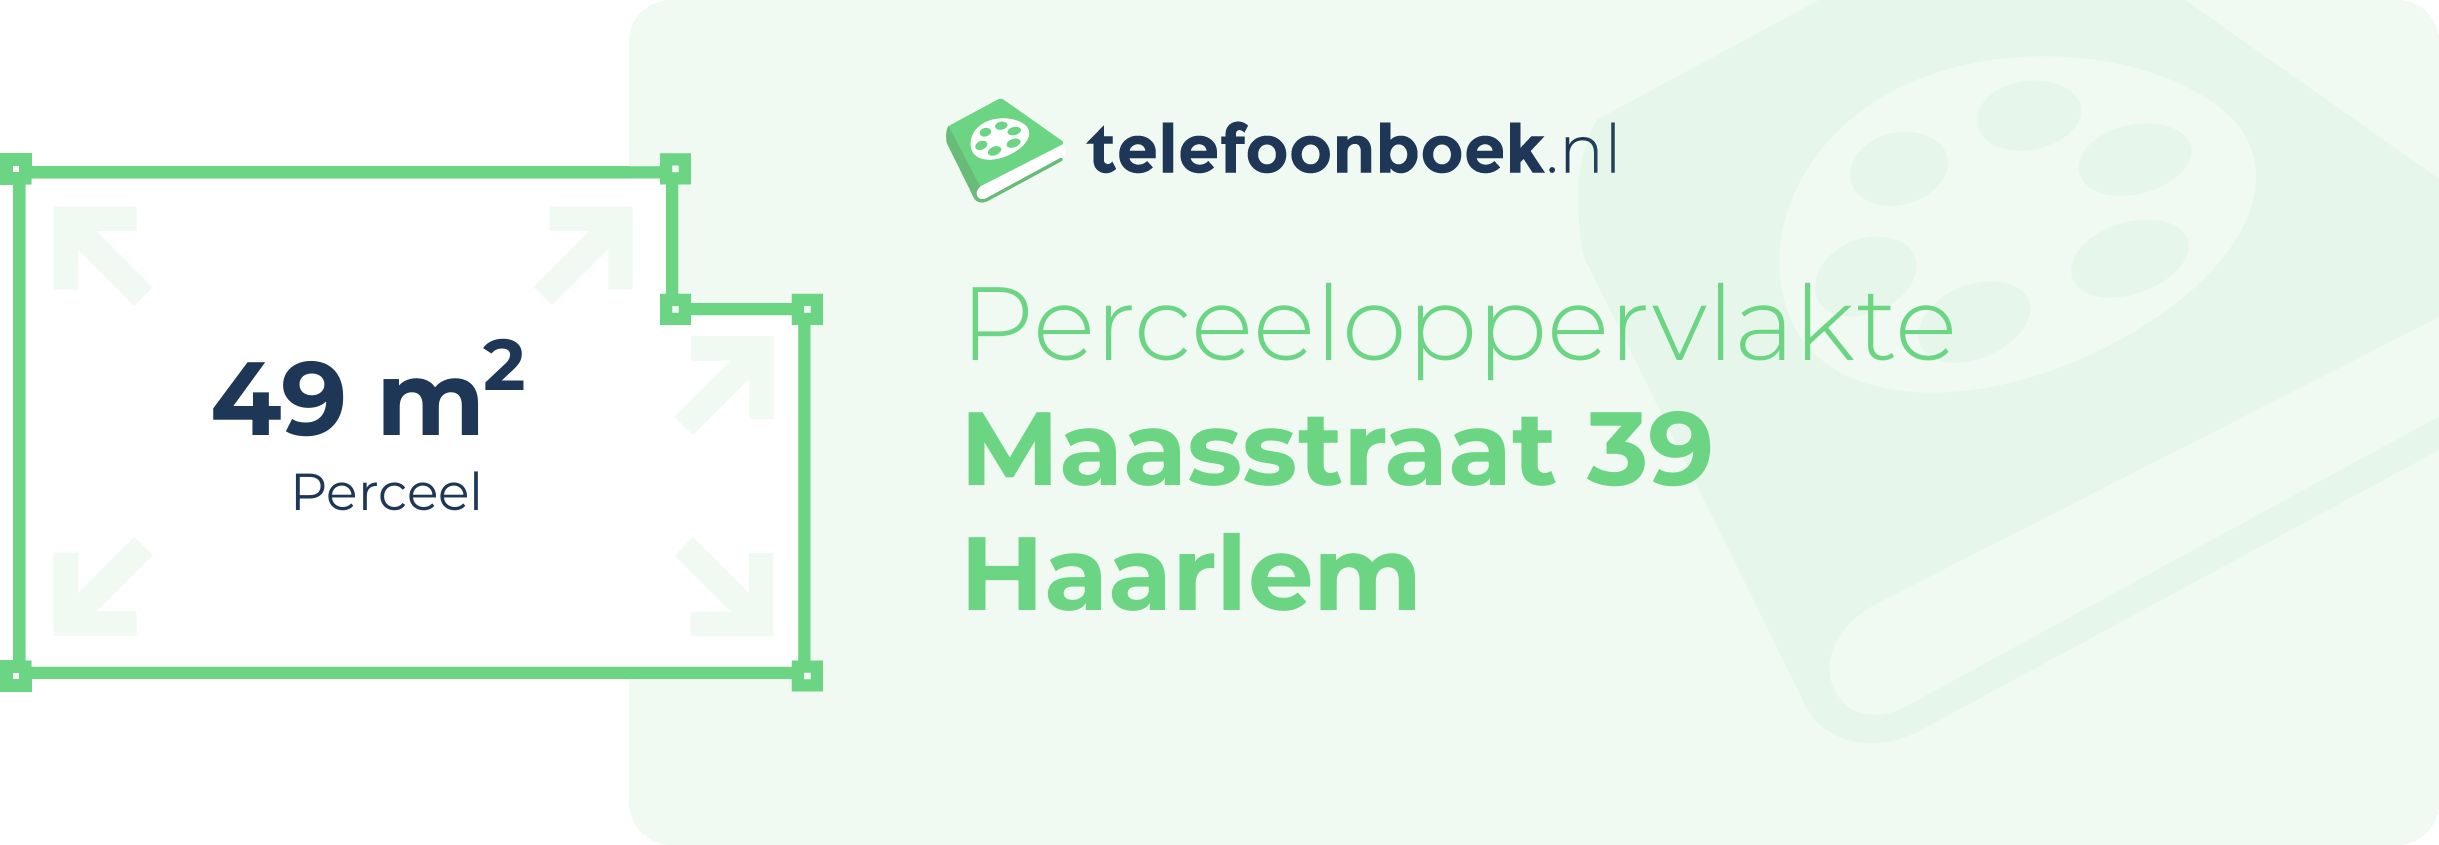 Perceeloppervlakte Maasstraat 39 Haarlem